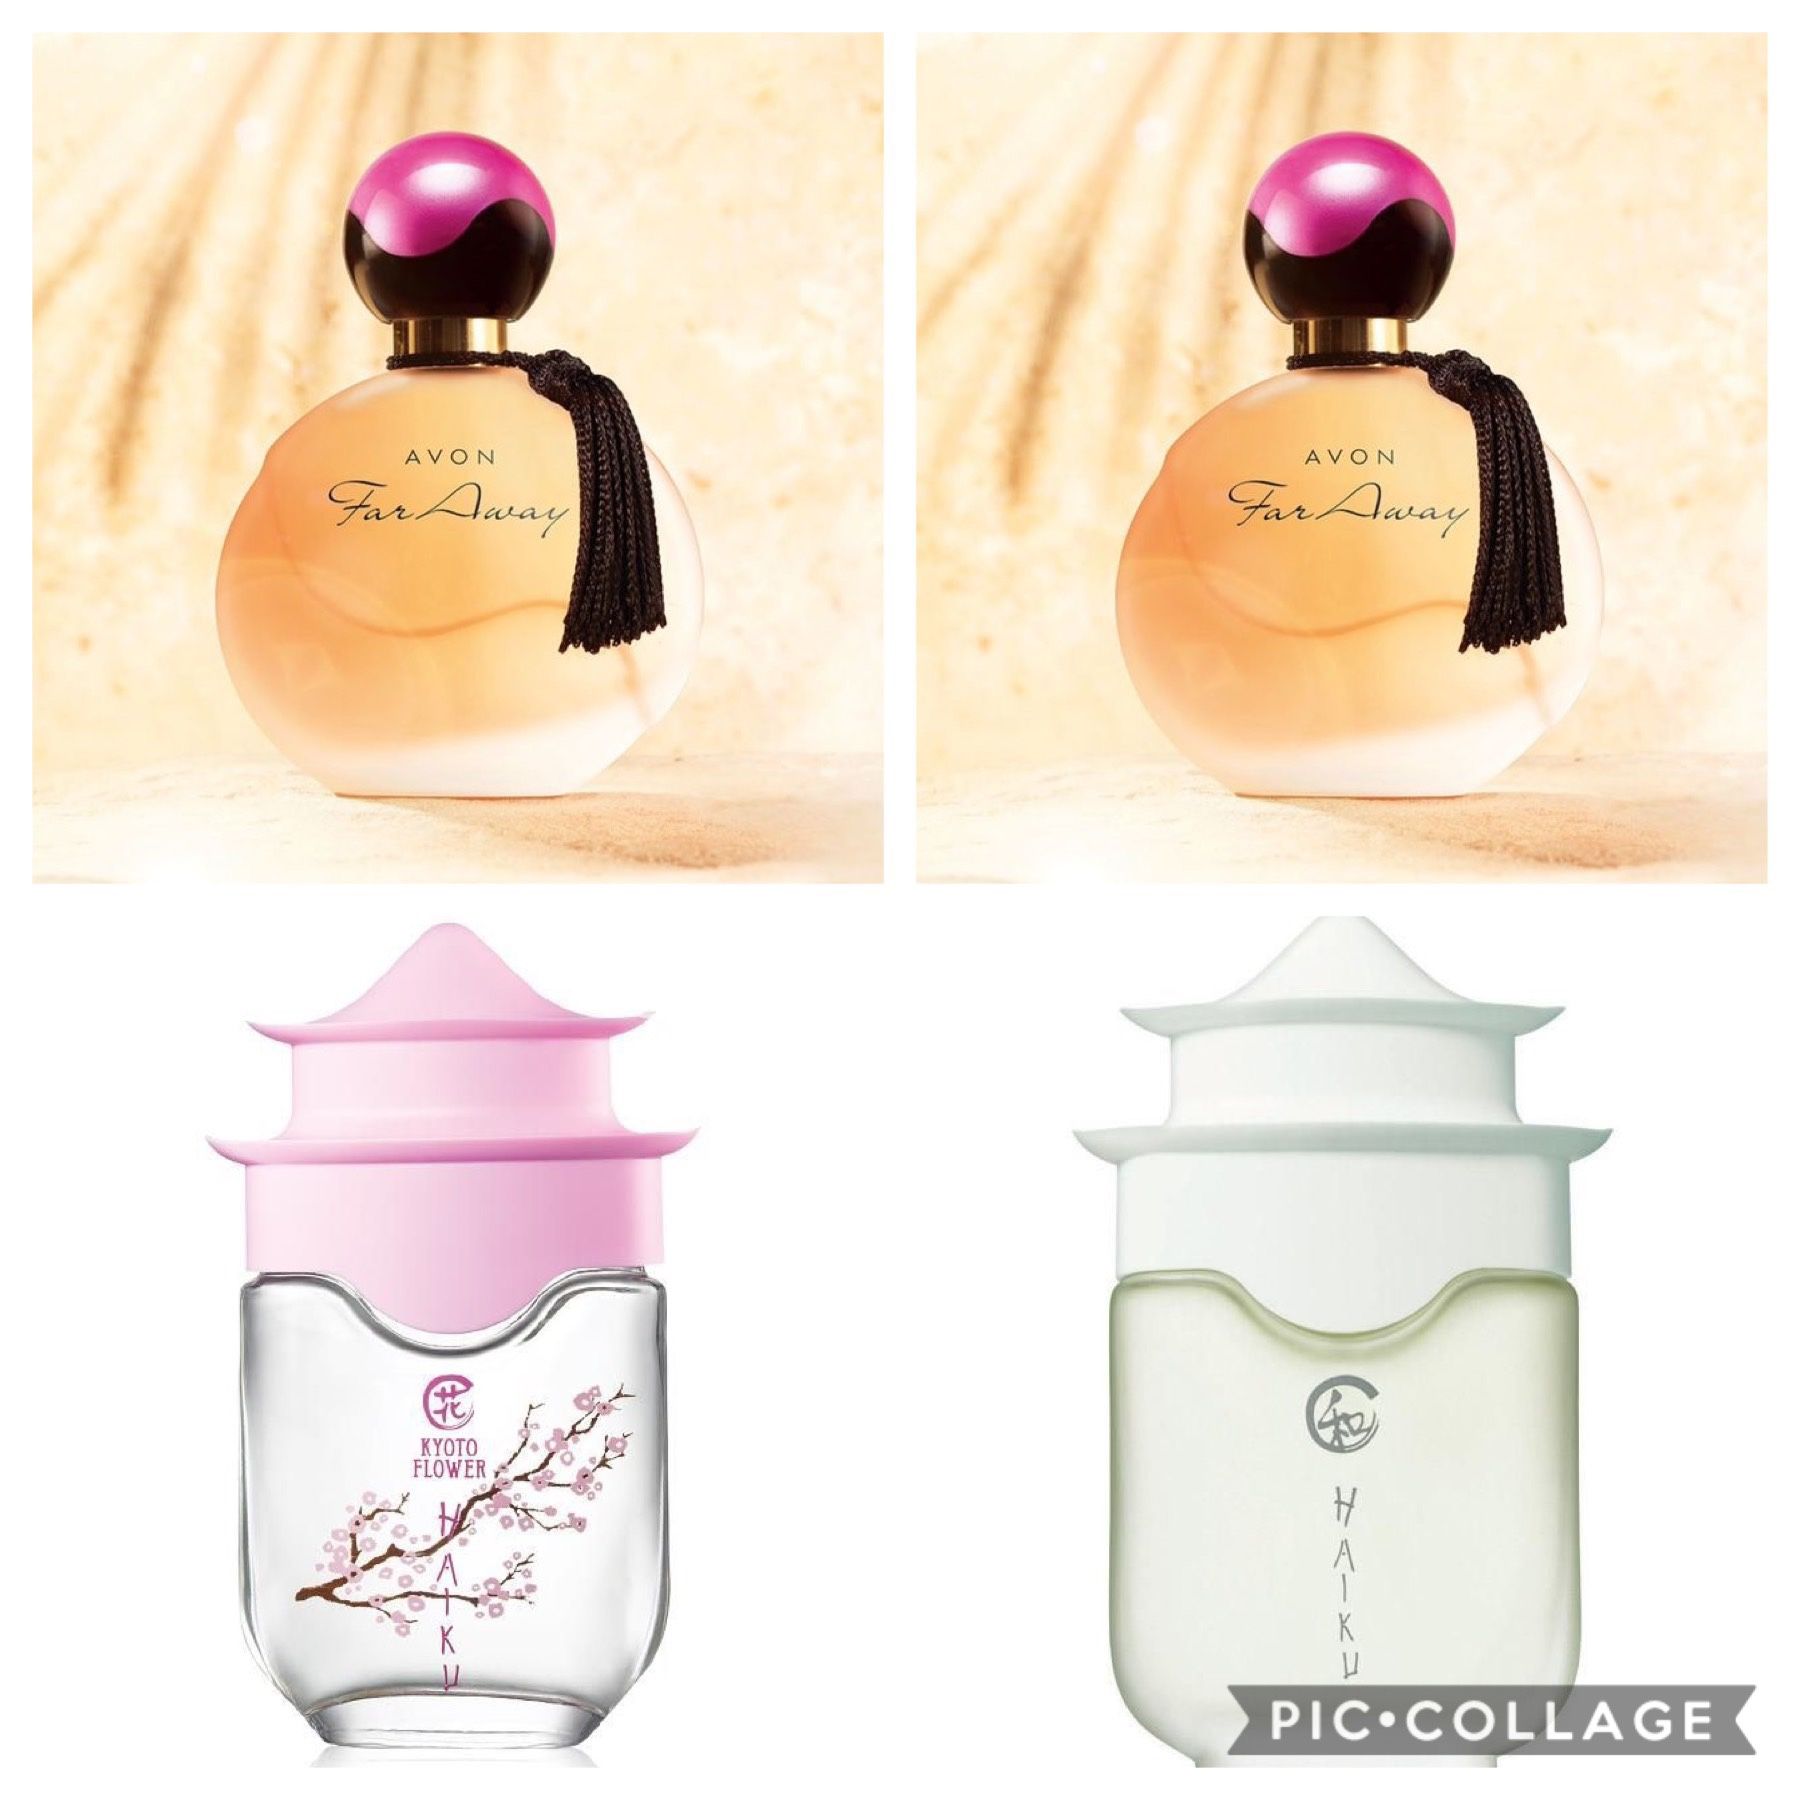 2 Avon Far Away Perfume, 1 Haiku & 1 Haiku Kyoto Flower perfumes